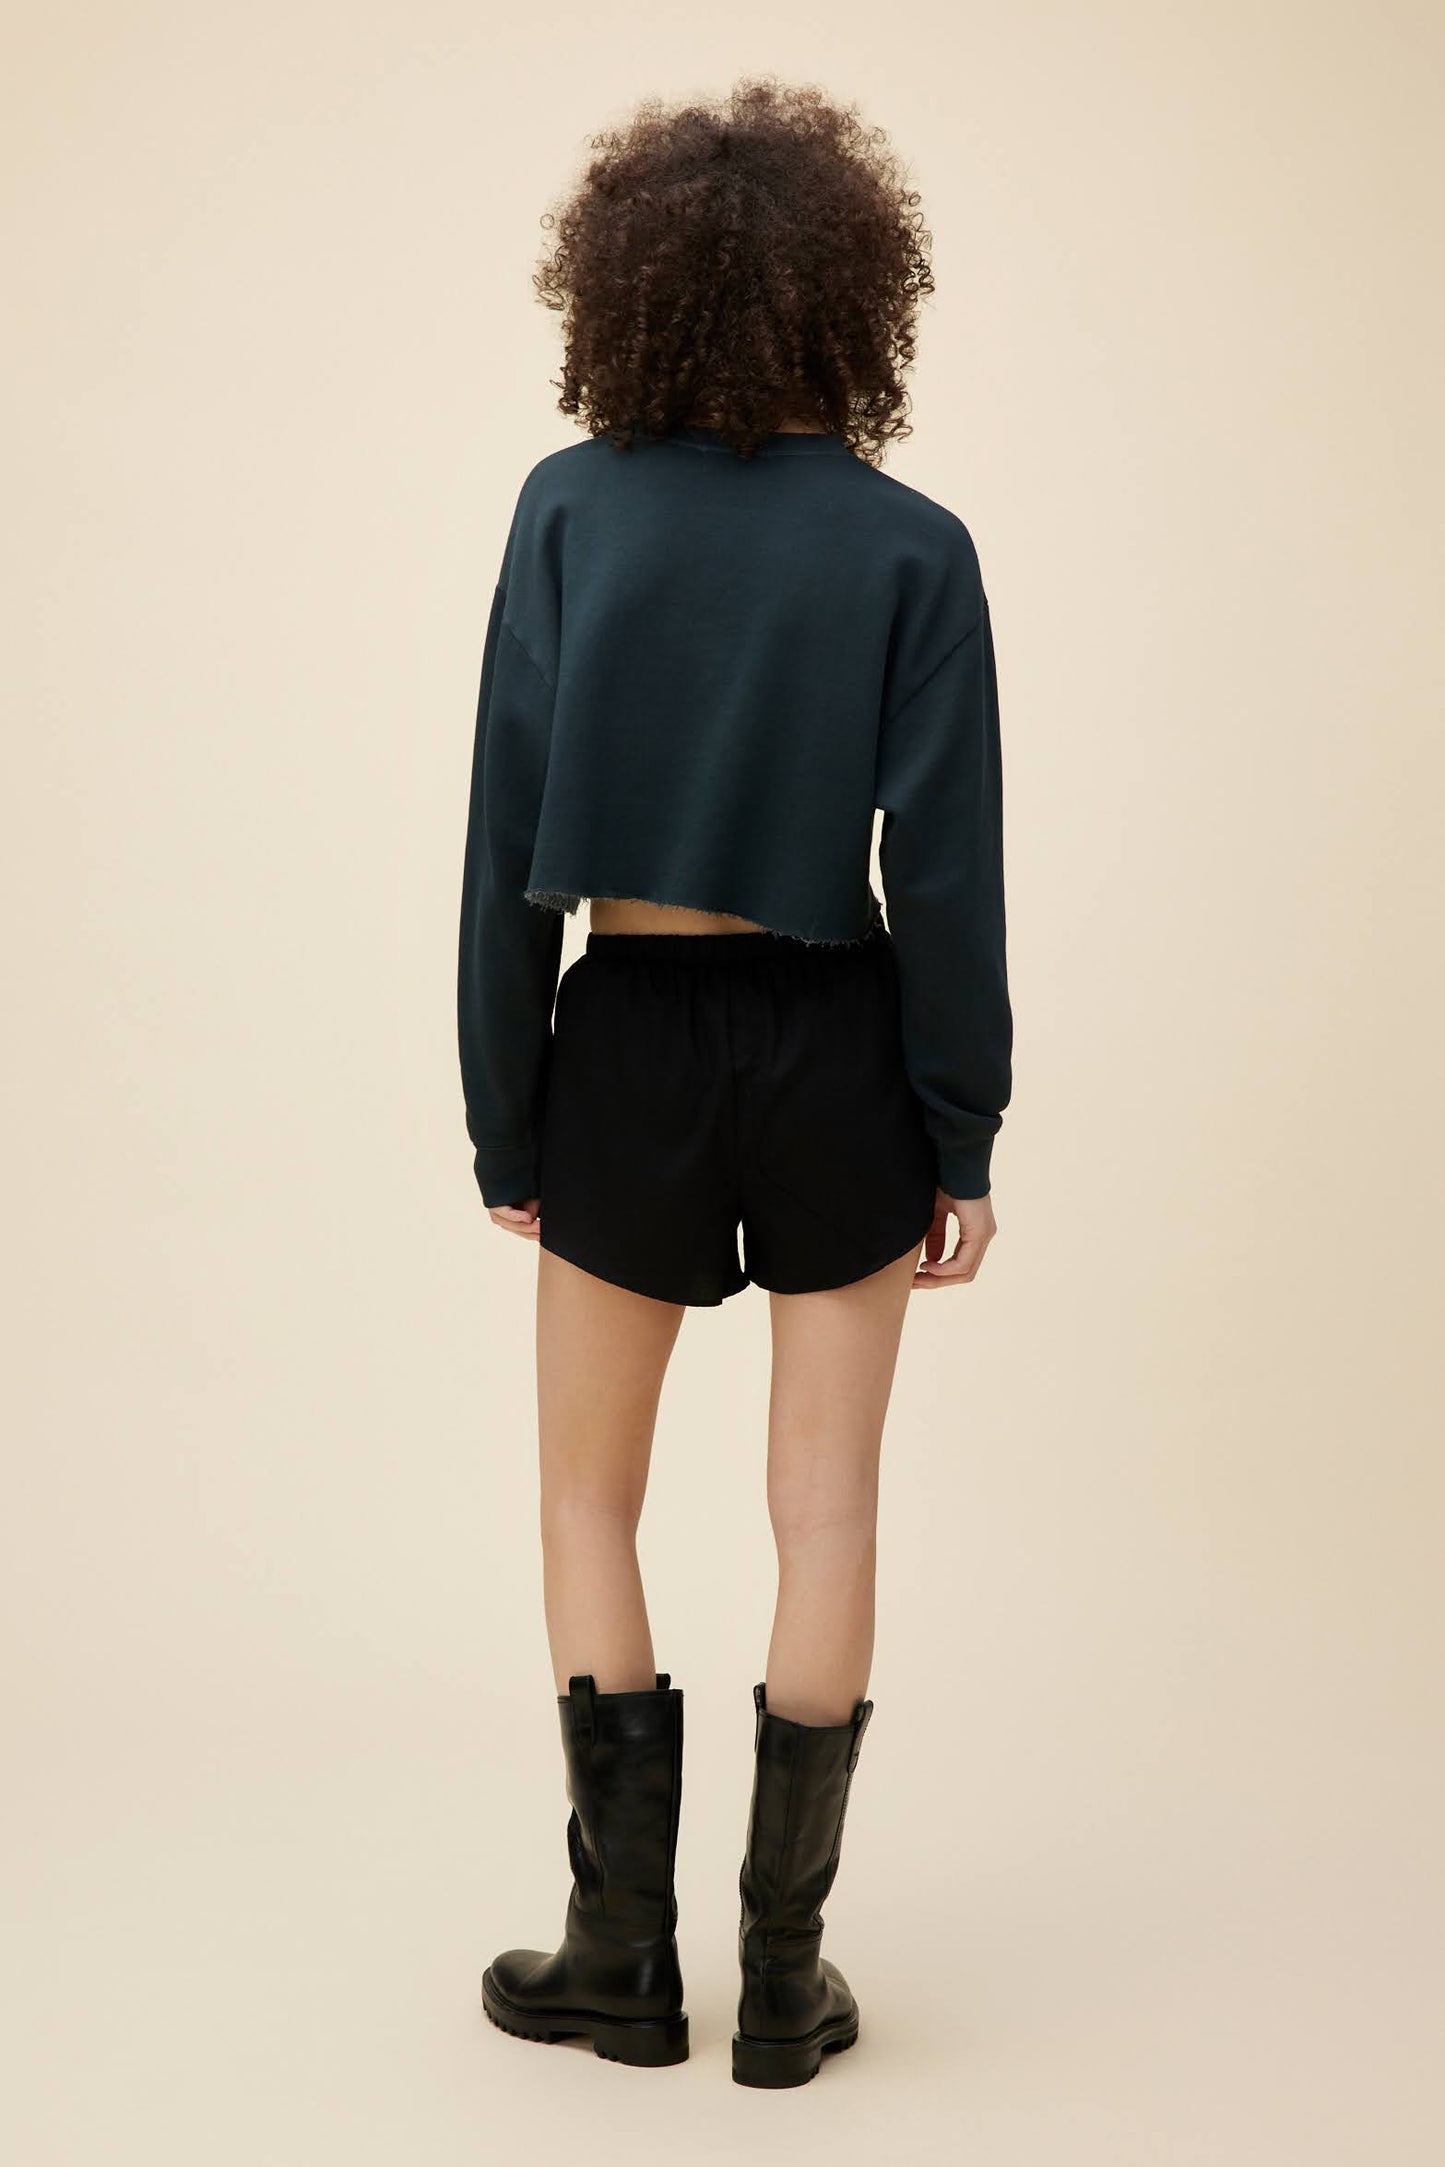 A model featuring a black solid cut off sweatshirt